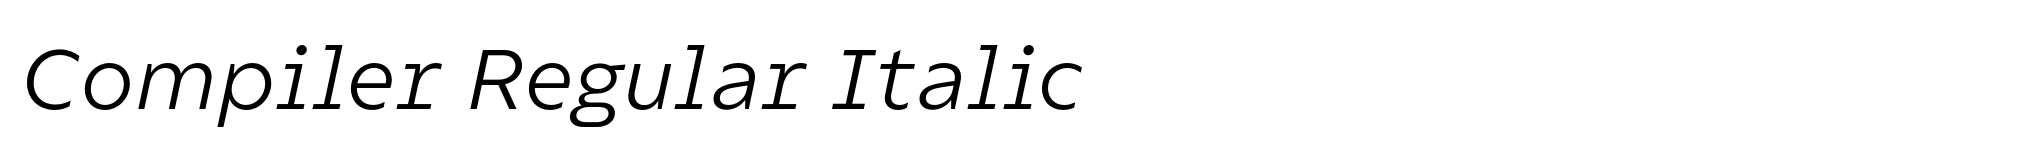 Compiler Regular Italic image